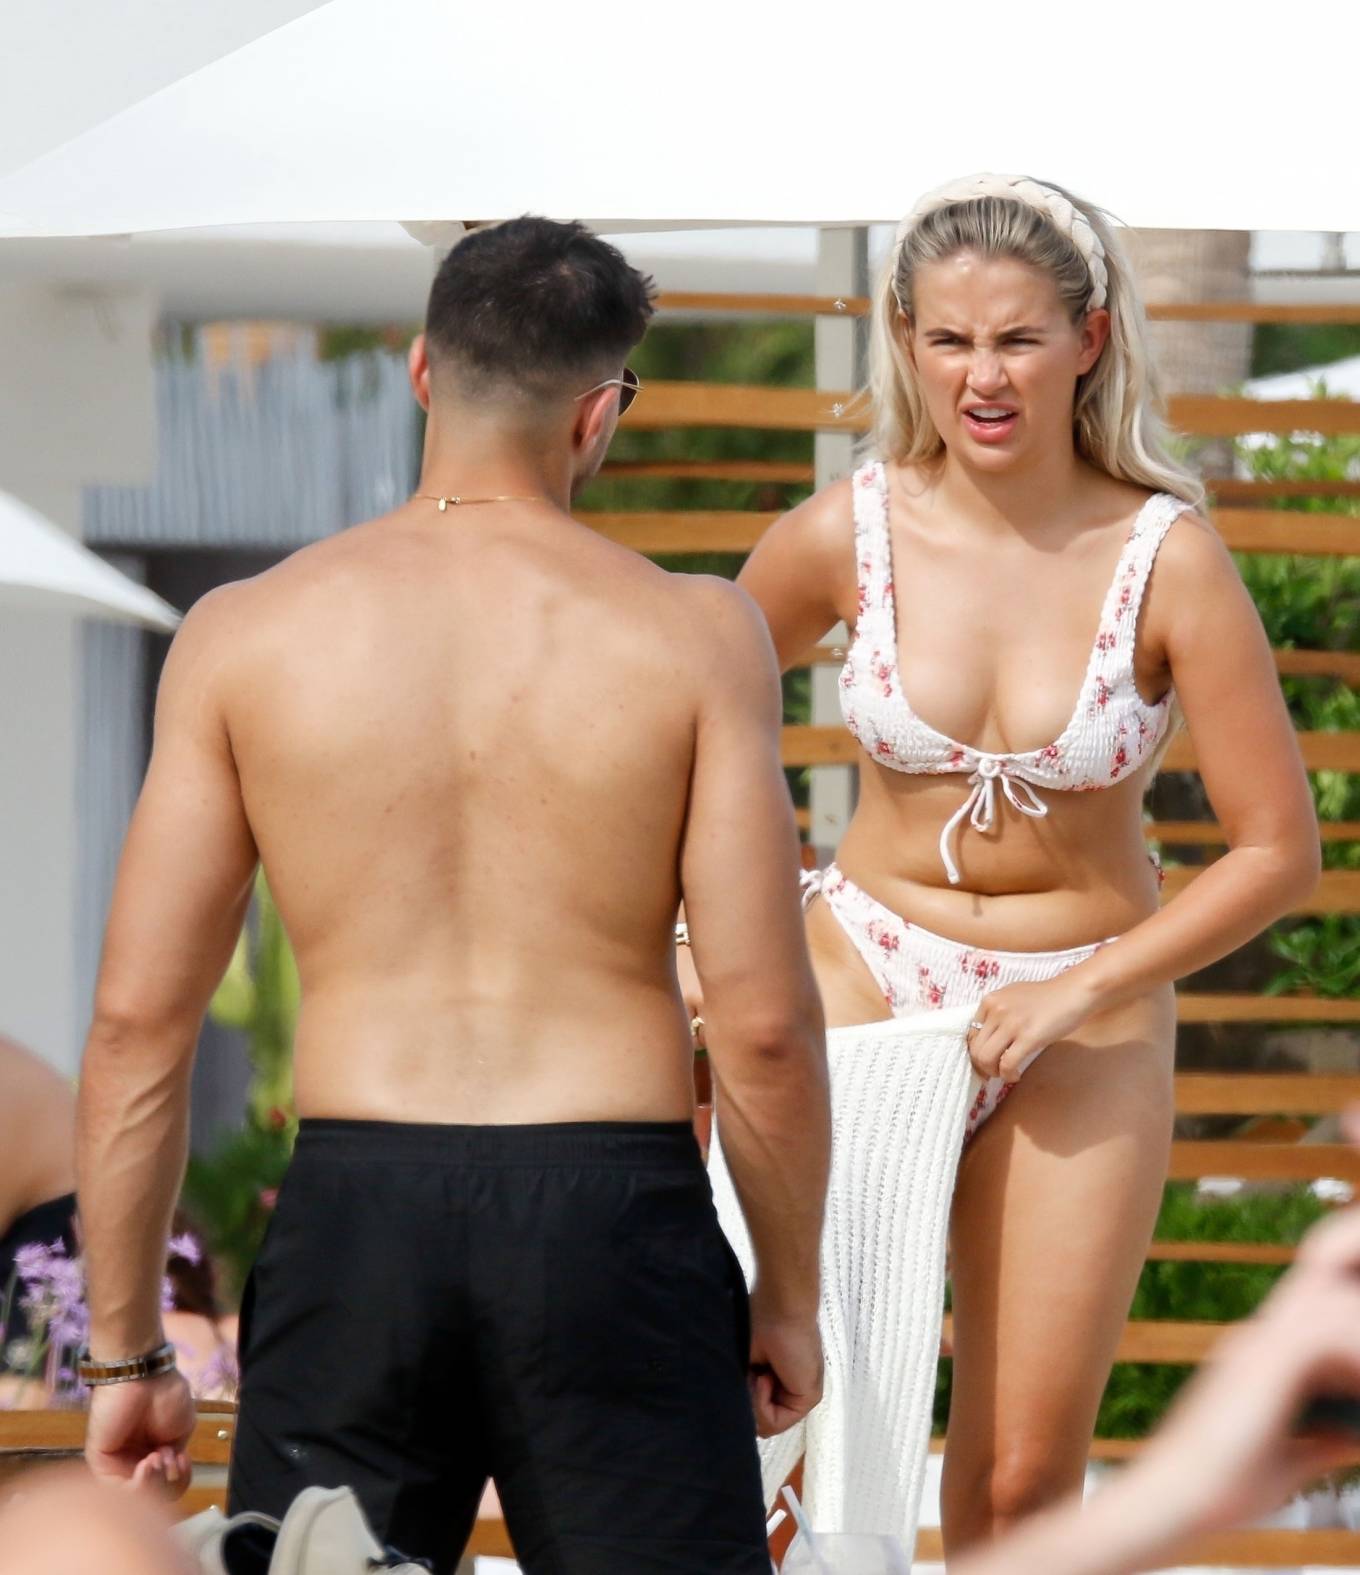 Molly Mae Hague in Bikini on holiday in Ibiza